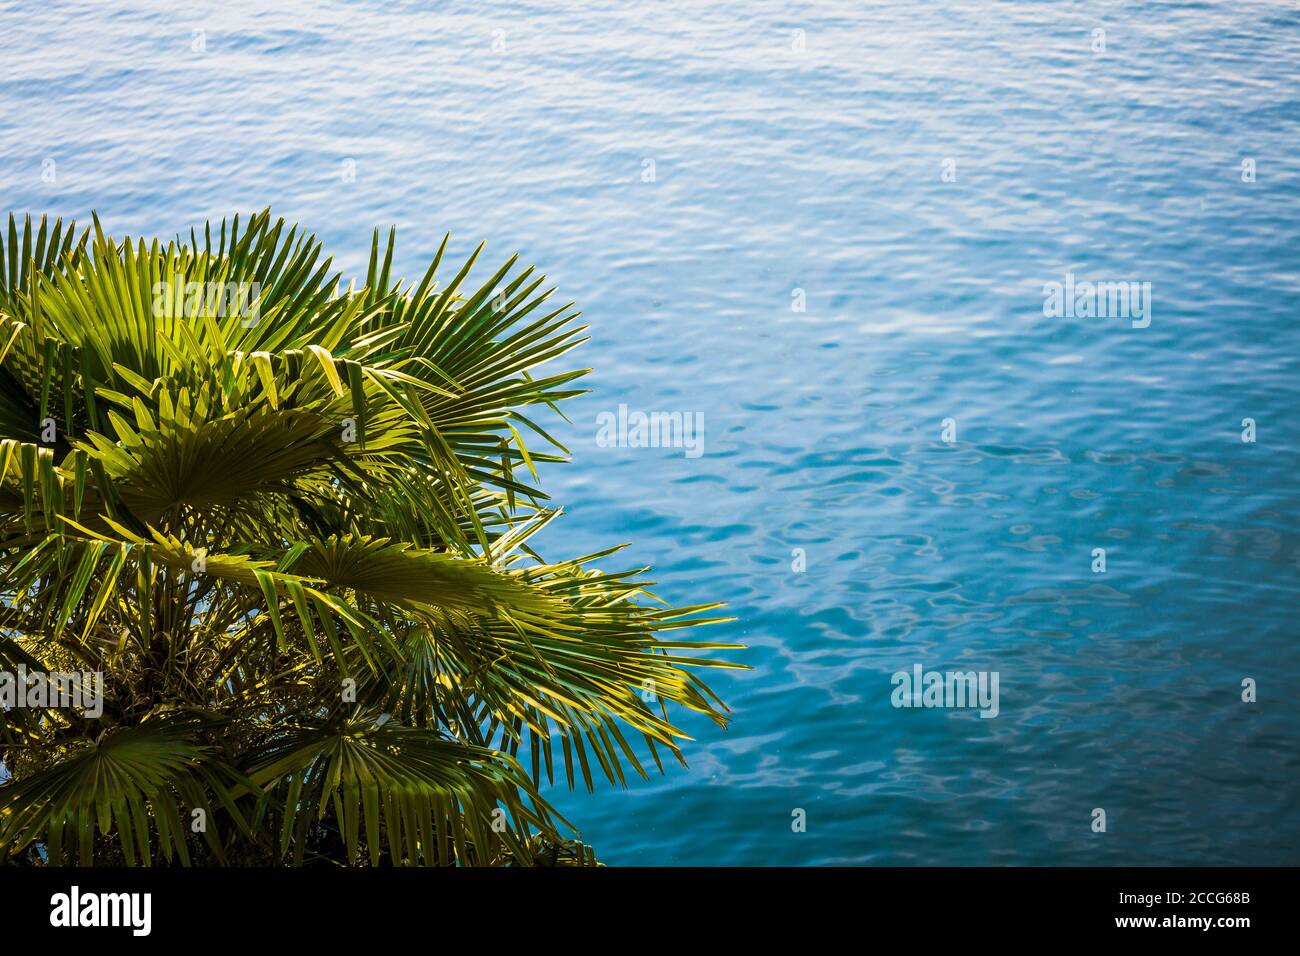 Europe, Italy, Lago di Garda, Limone sul Garda, Stock Photo